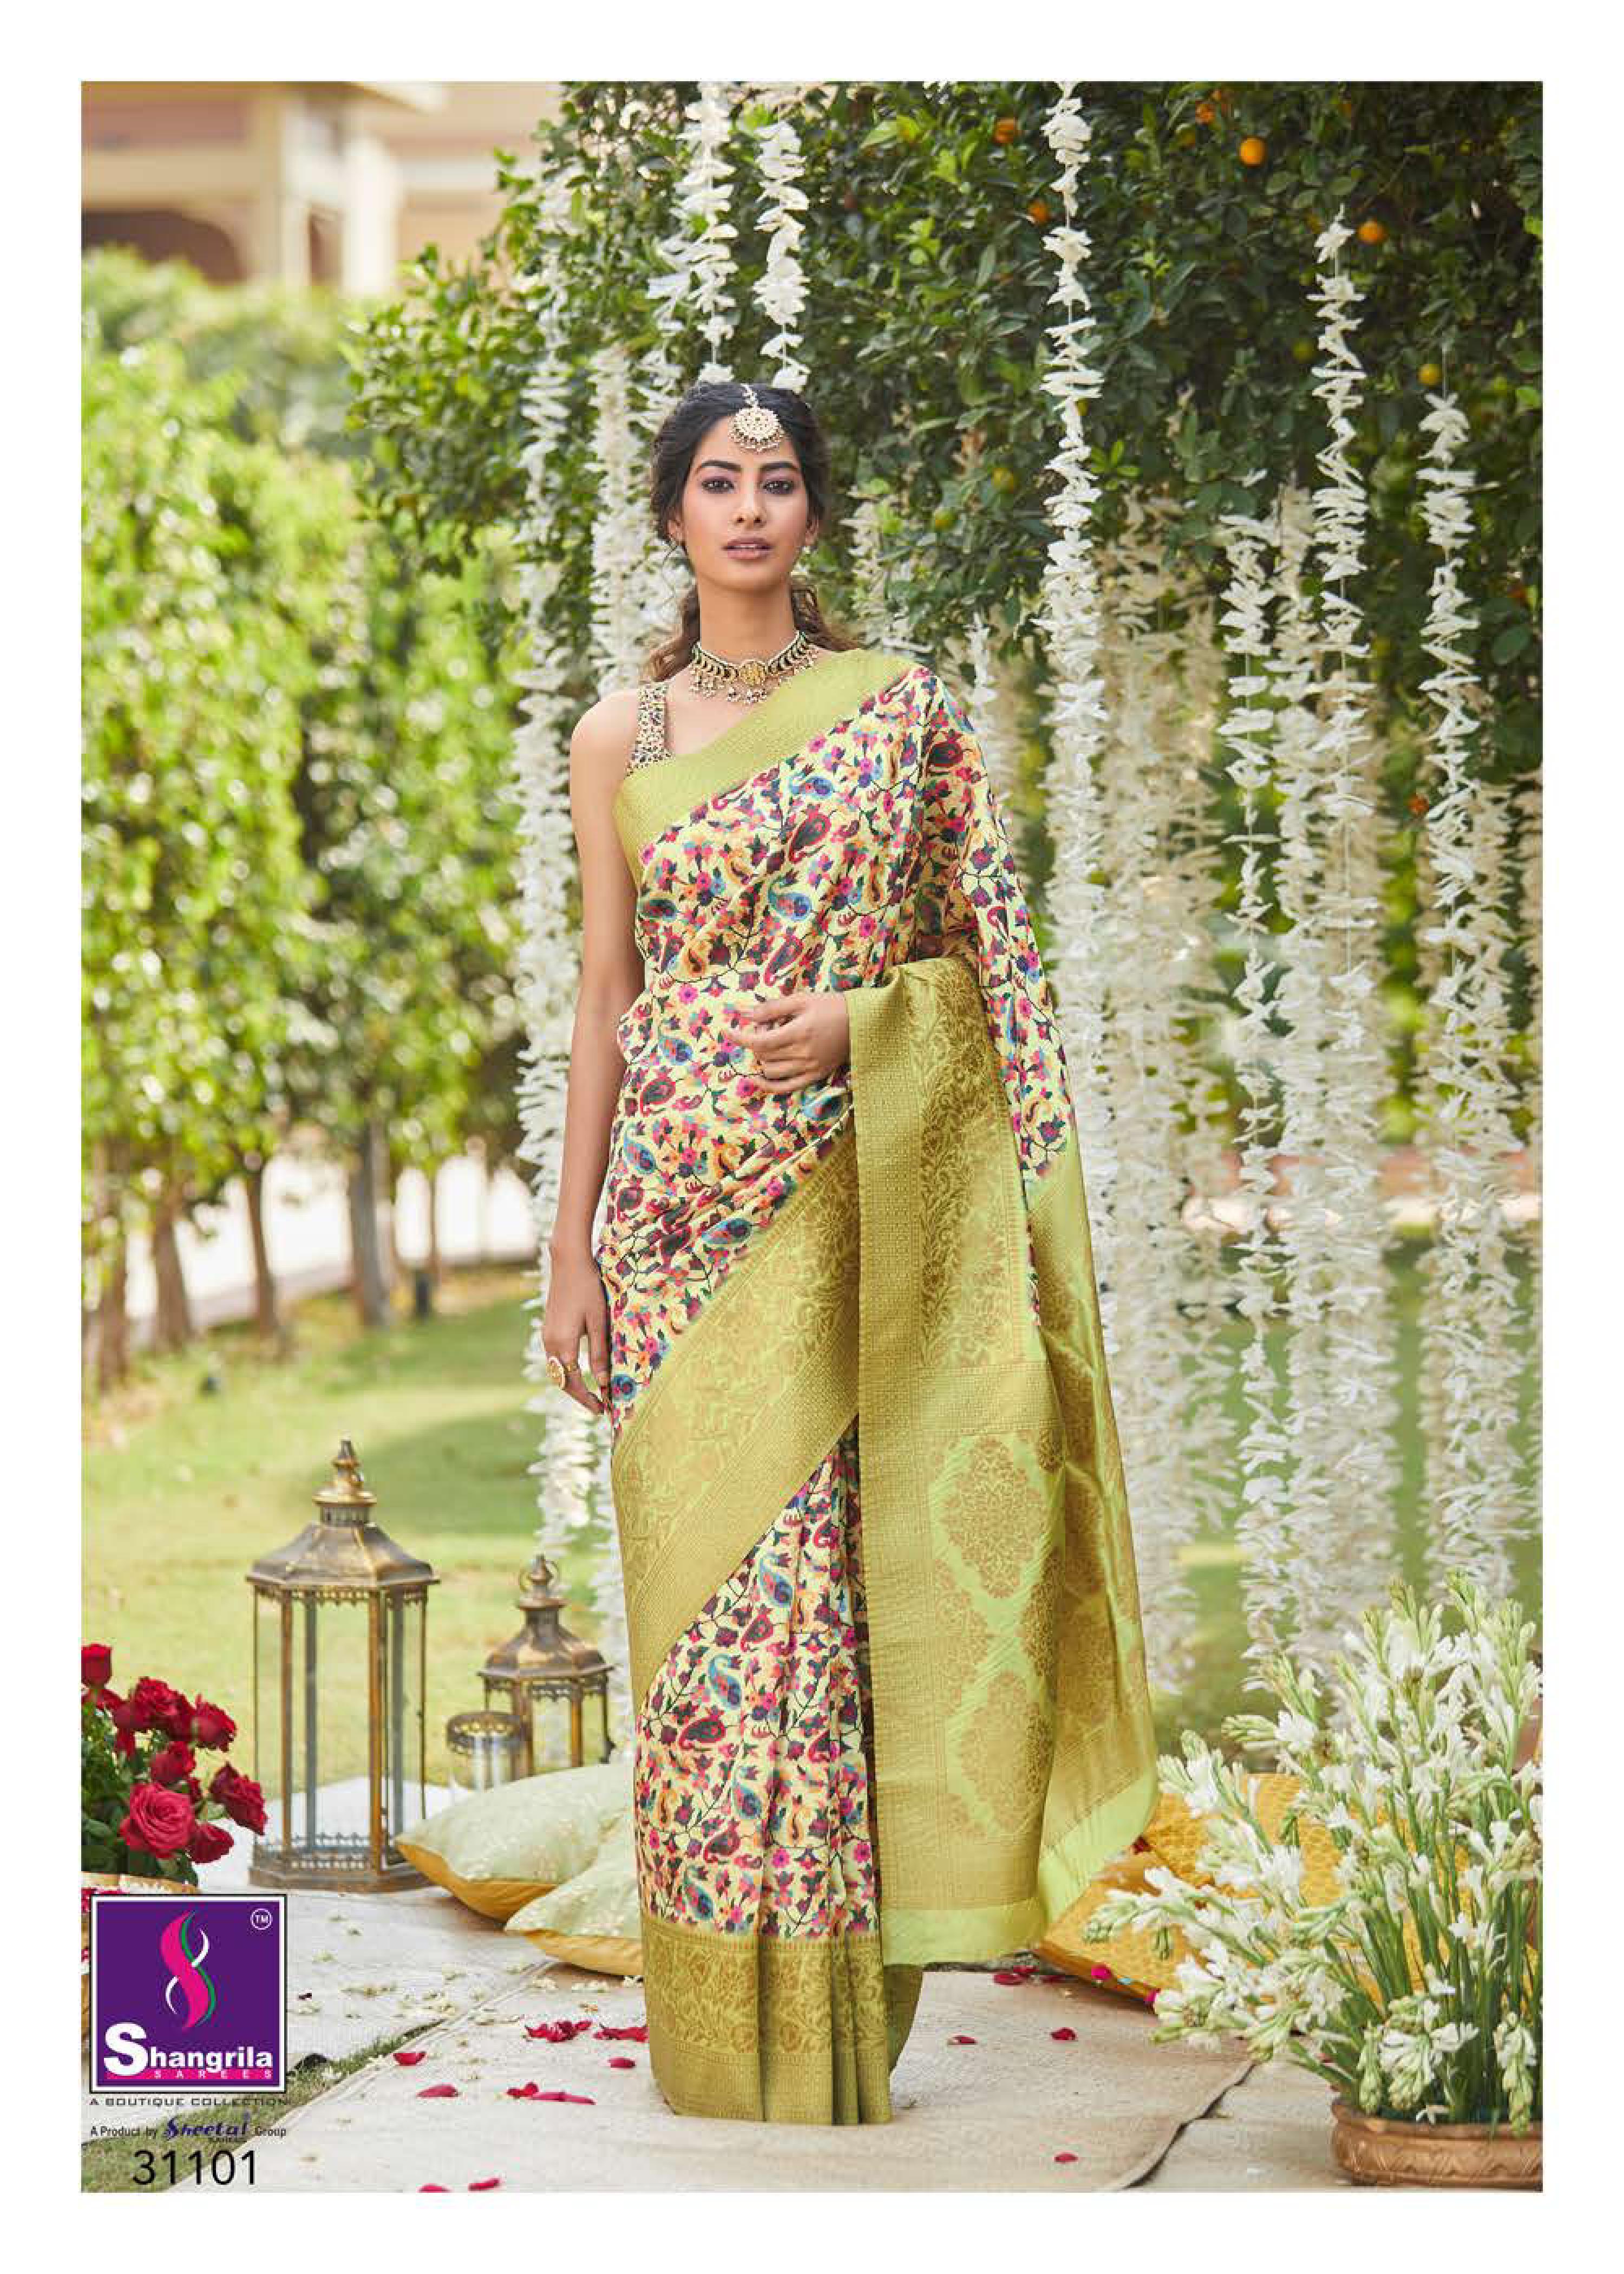 Shangrila Rich Kashmiri Digital Designer Ethnic Wear Saree Catalog